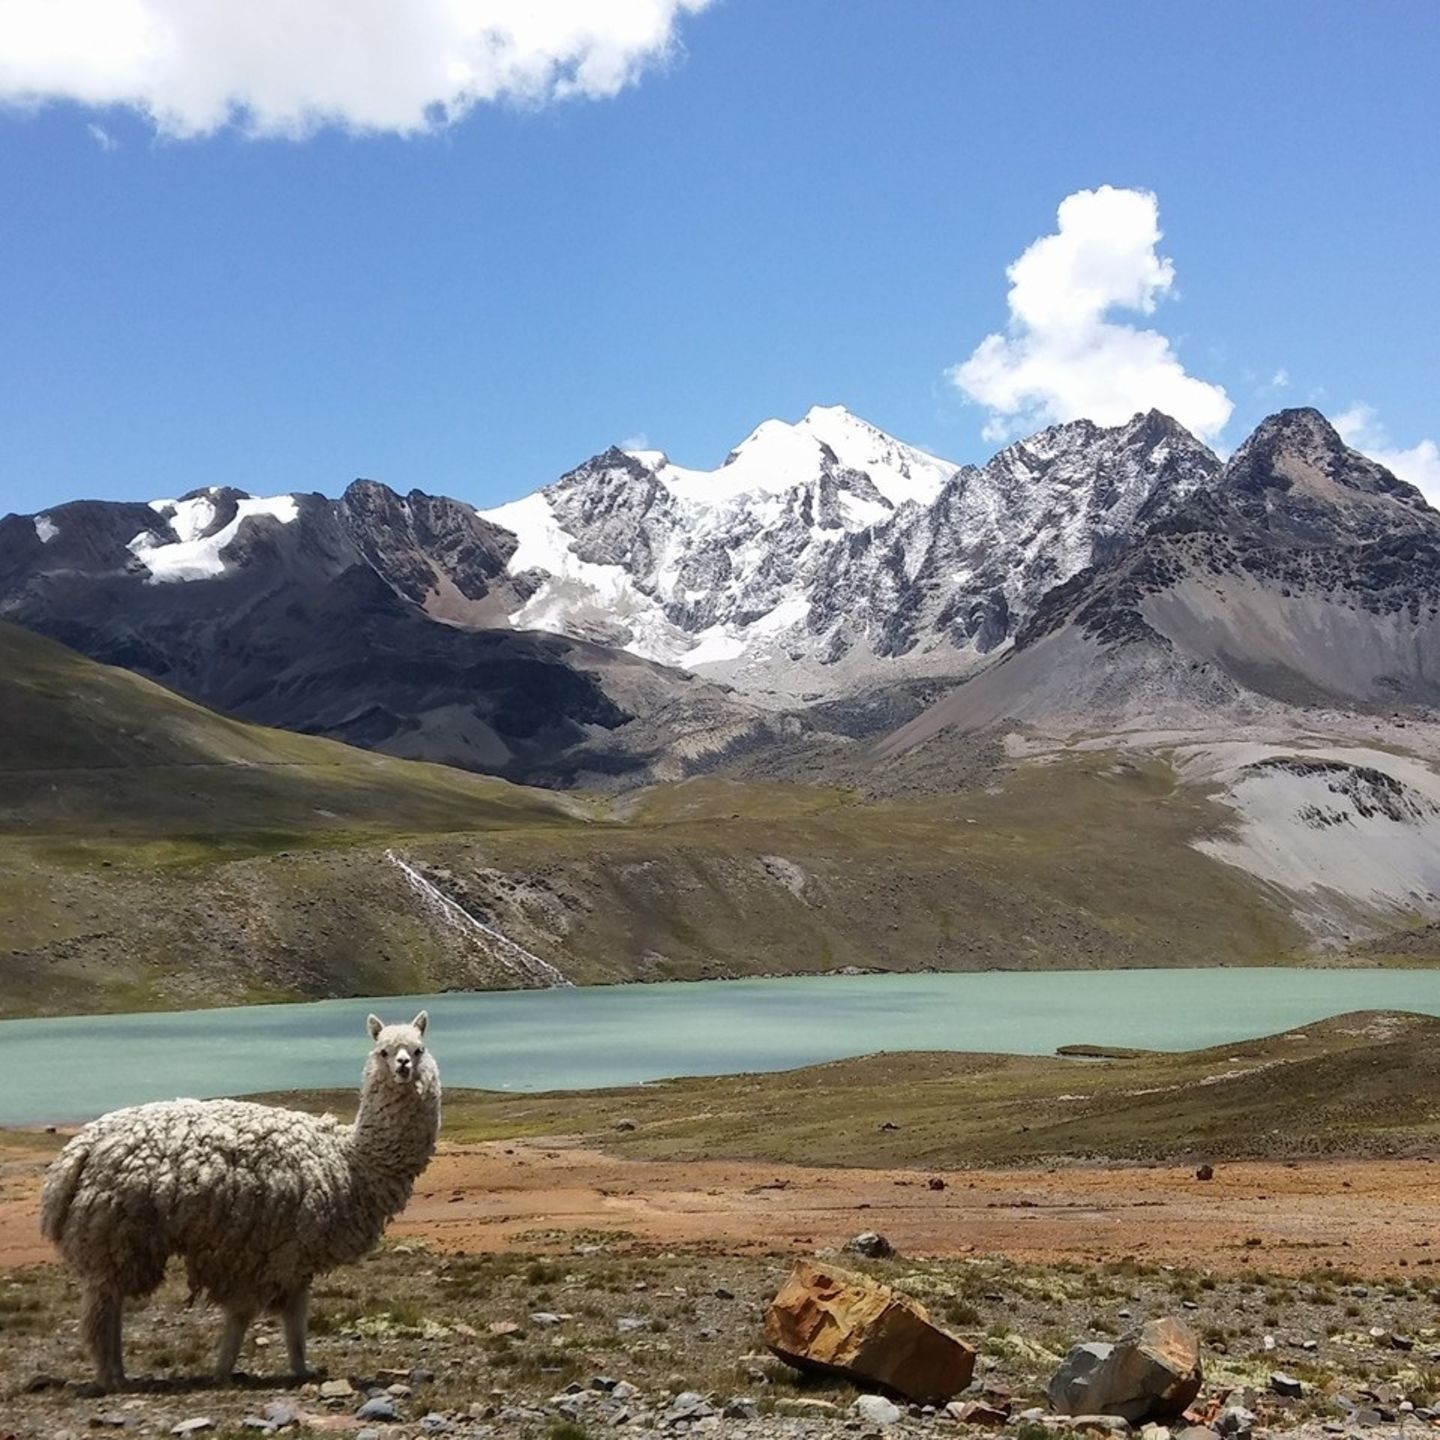 Lama in Bolivien